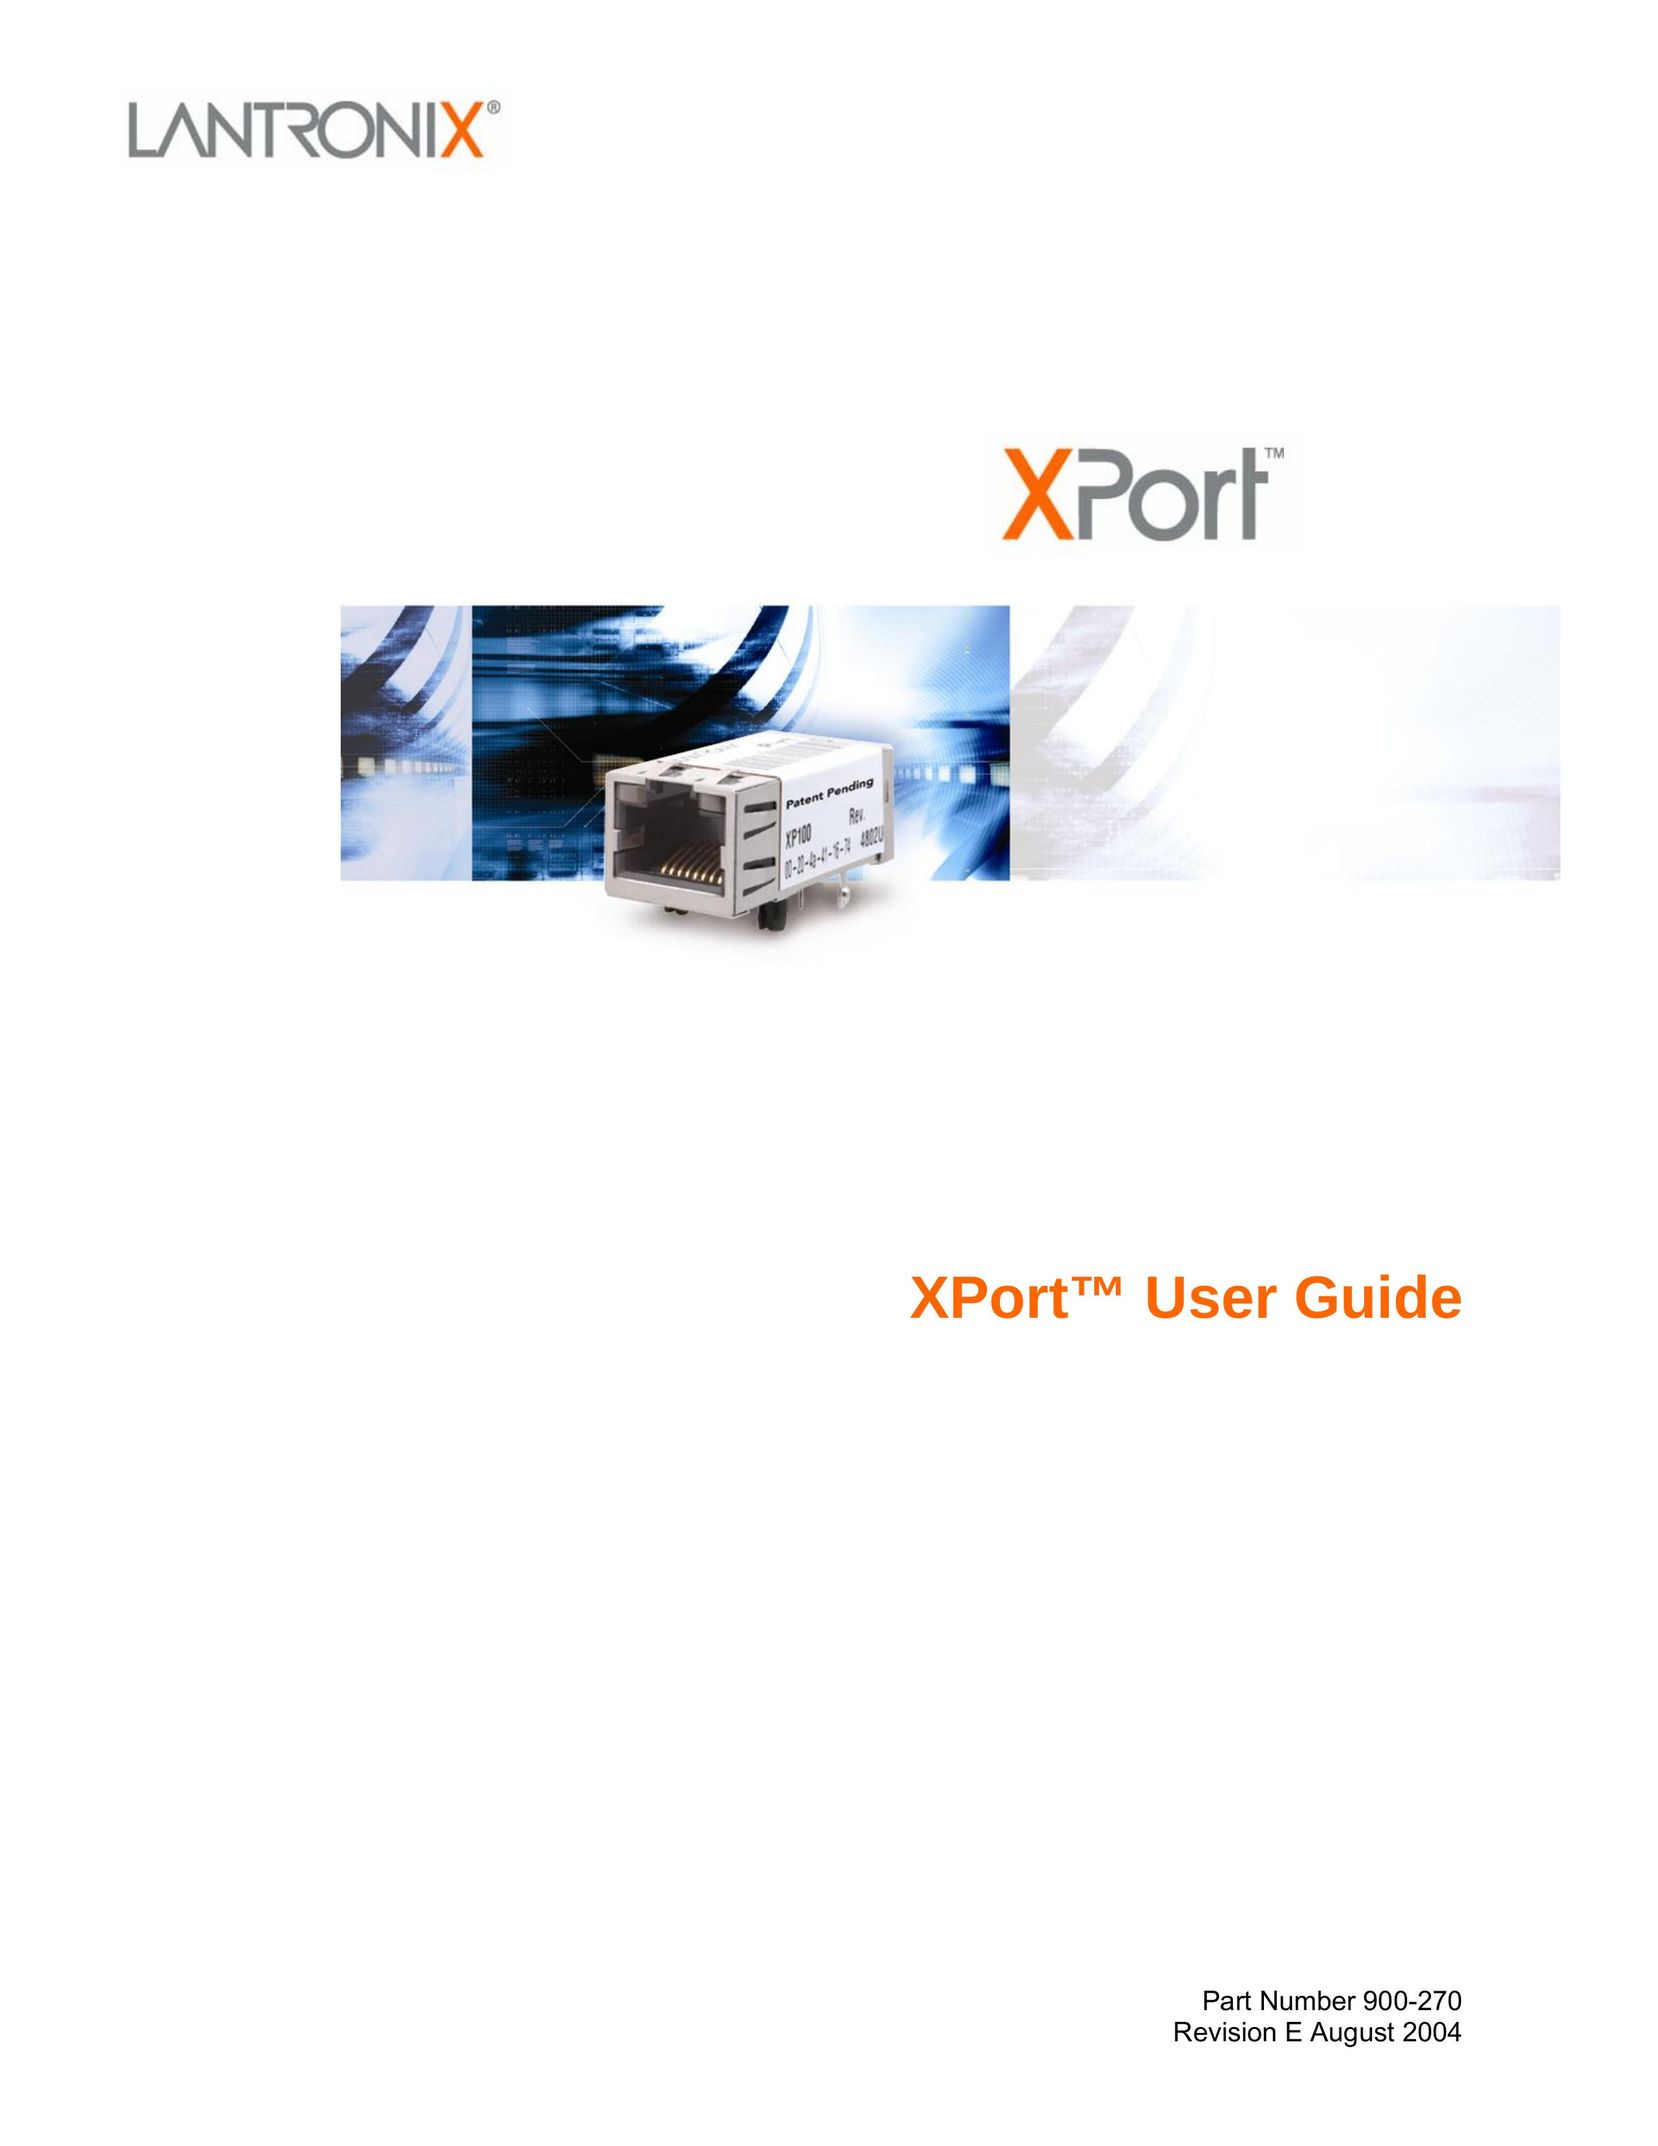 Lantronix XPort Network Card User Manual